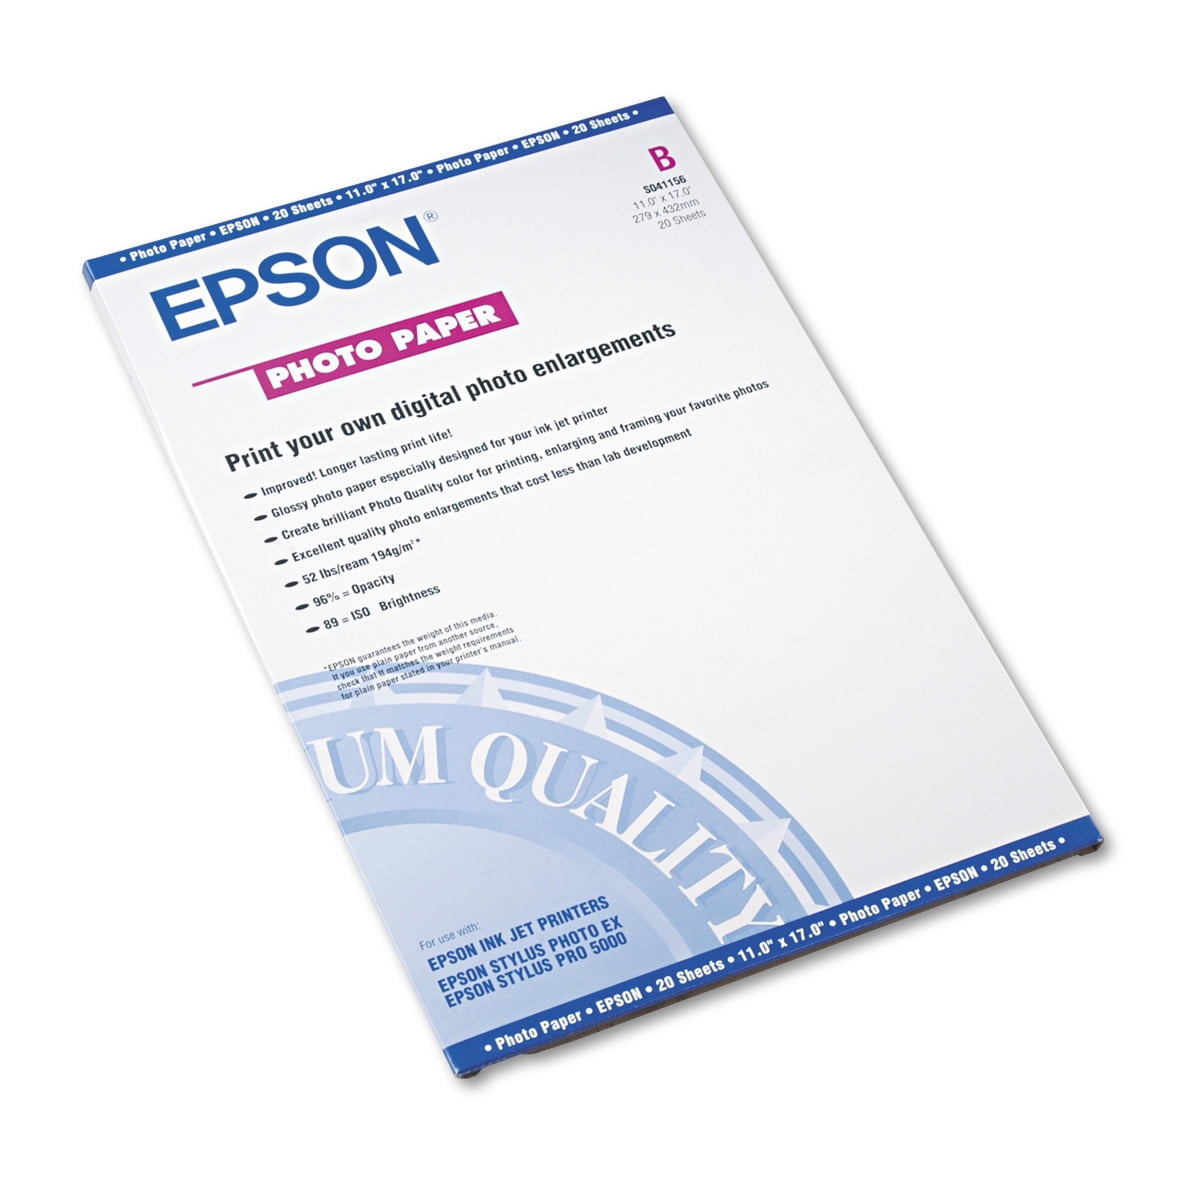  Epson Premium Presentation Paper MATTE (8.5x11 Inches